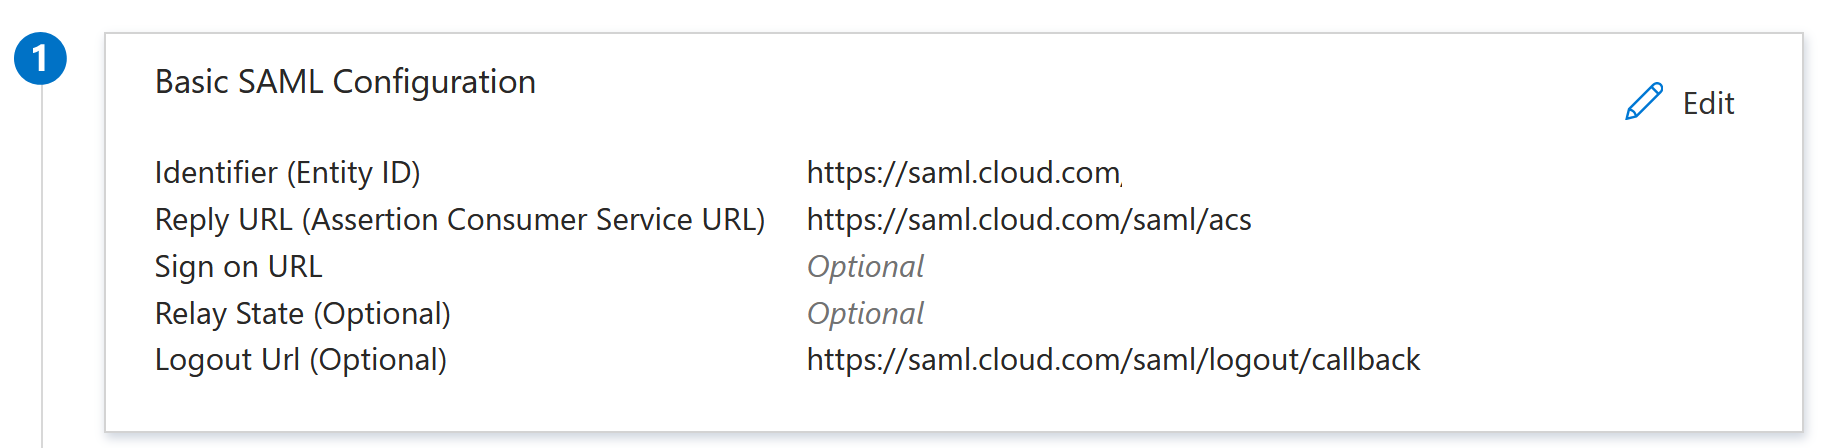 Configuración básica de SAML